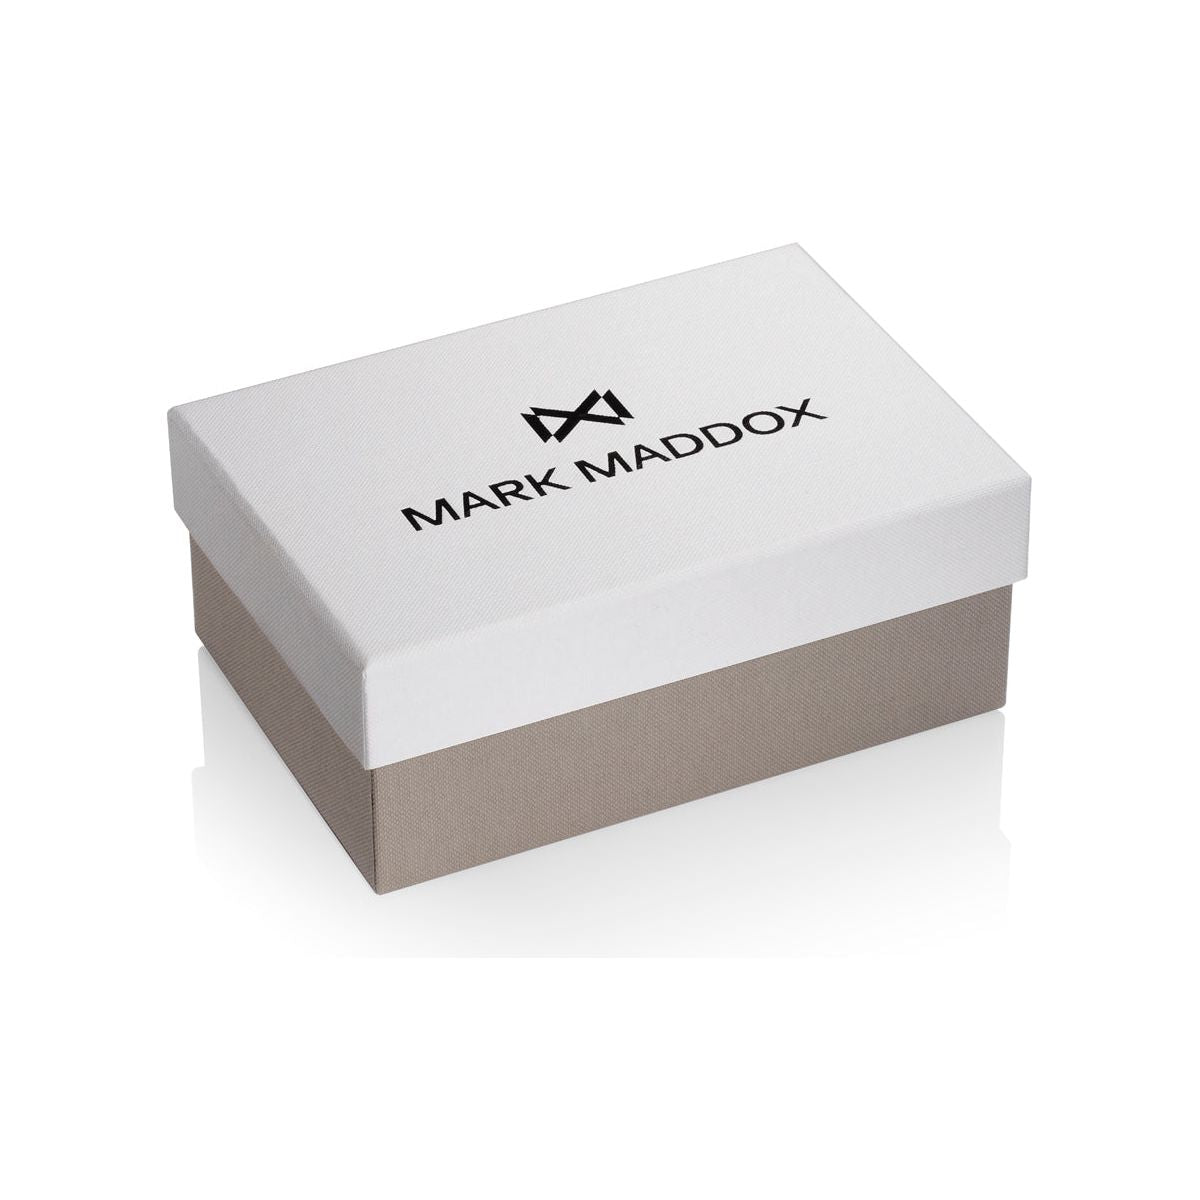 MARK MADDOX MARK MADDOX - NEW COLLECTION Mod. MM7145-03 WATCHES mark-maddox-new-collection-mod-mm7145-03